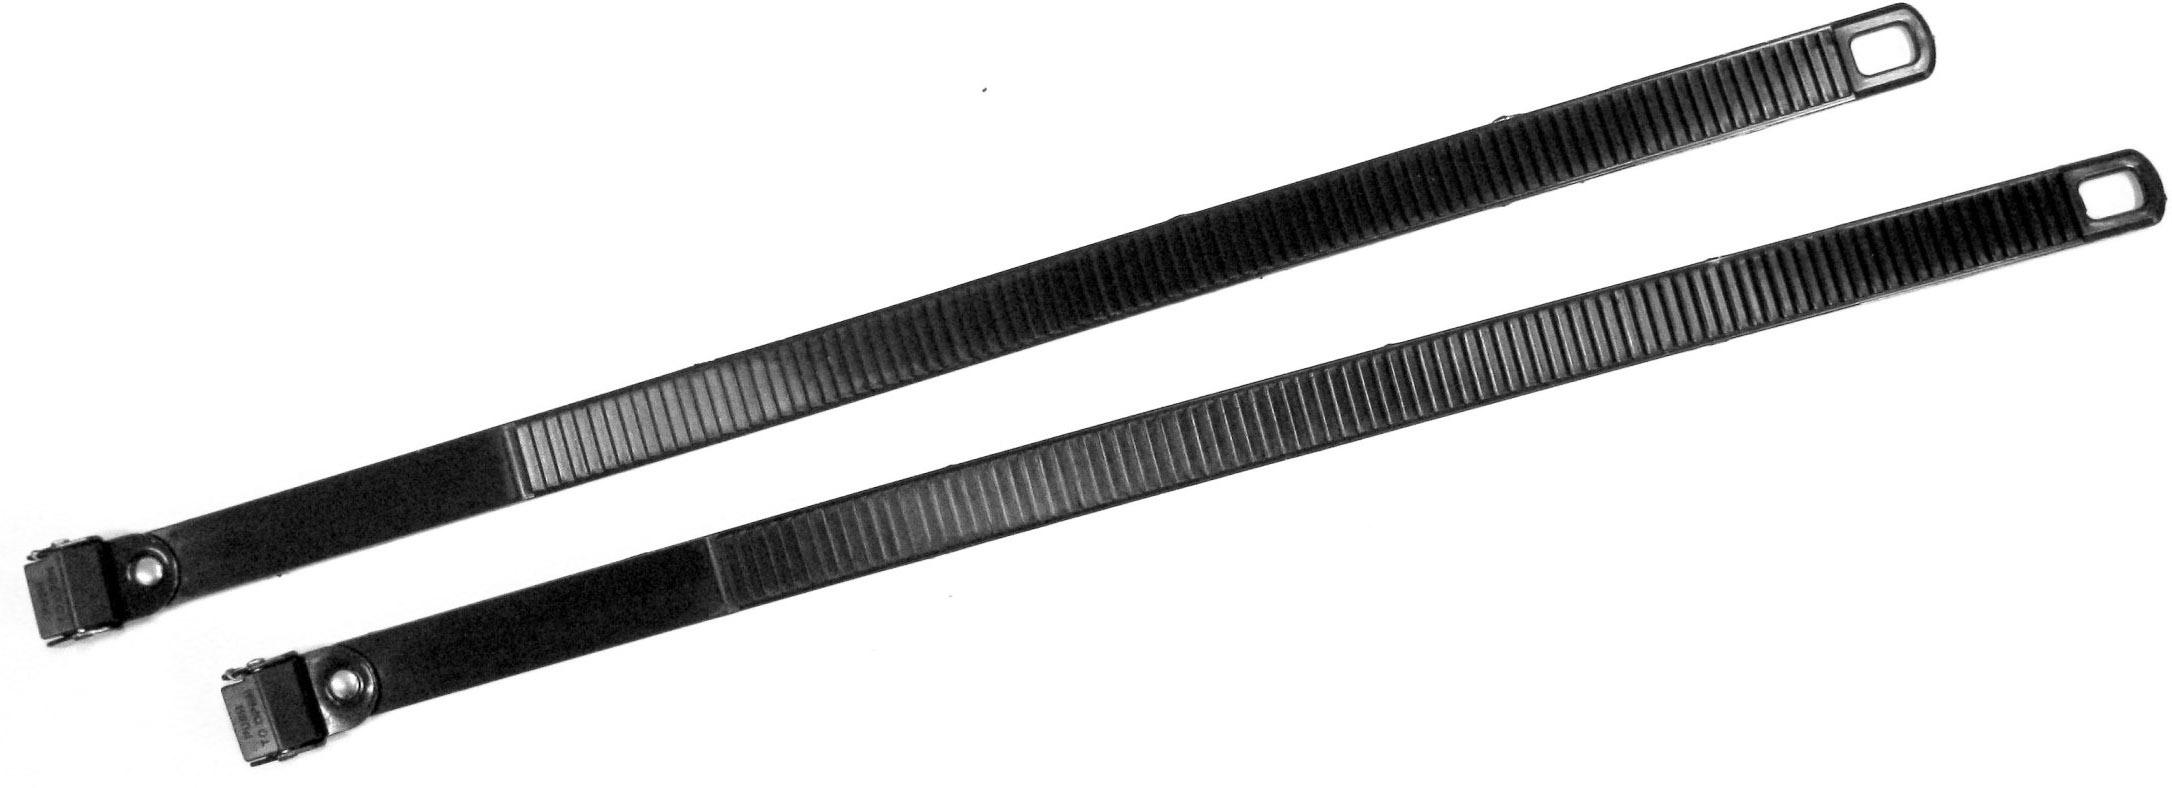 Peruzo Wheel Holder Strap Extensions  Black